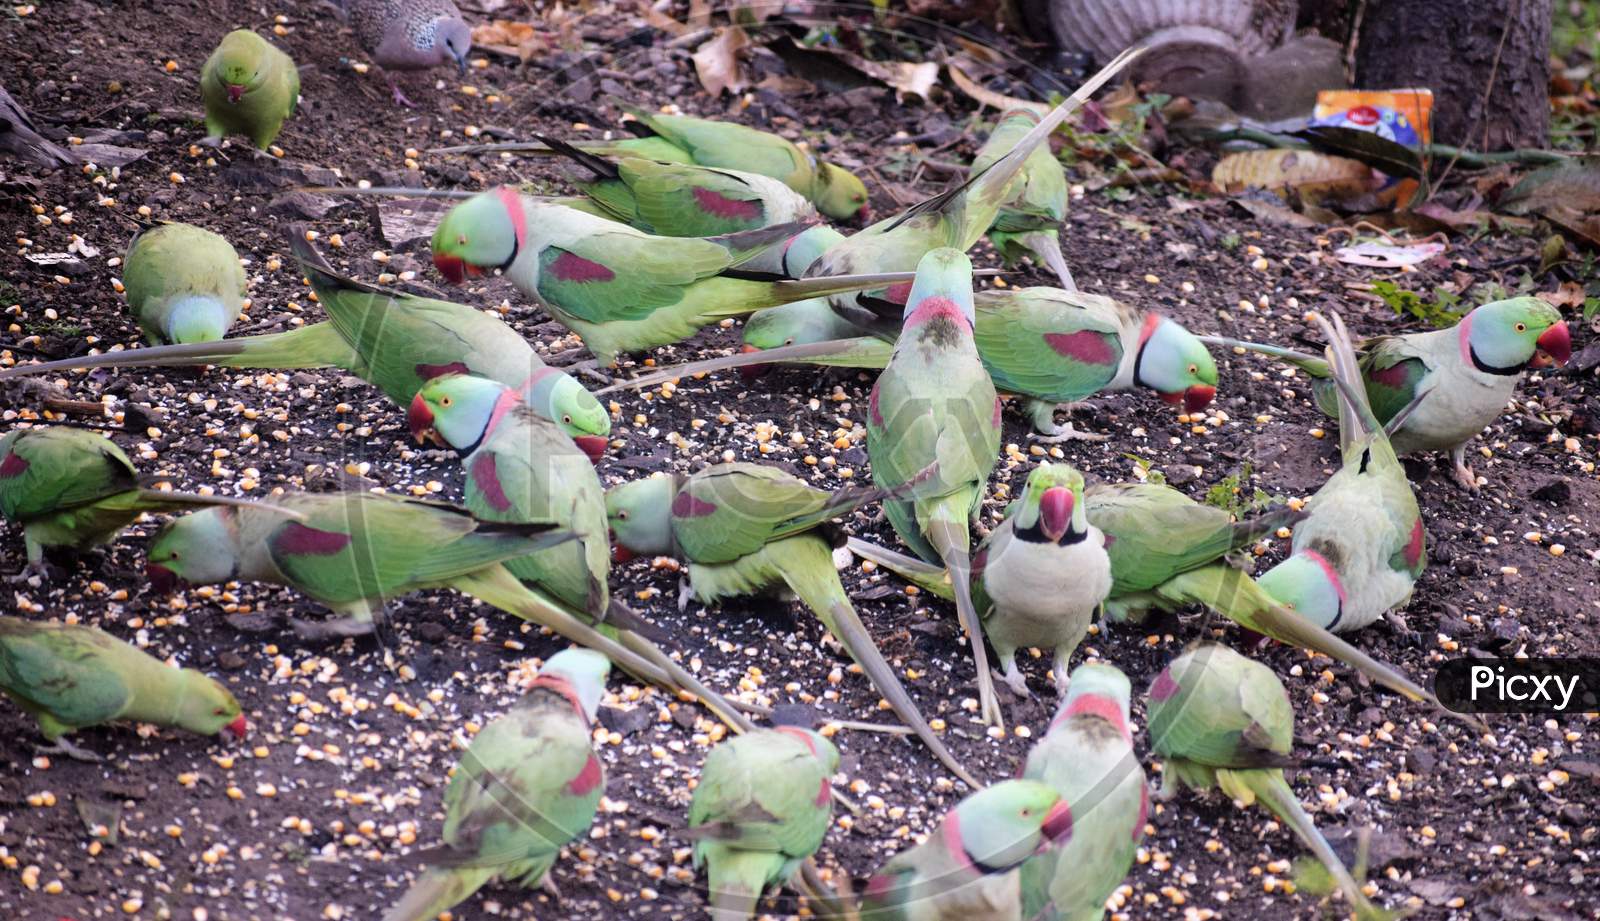 Parakeet eating grain in group